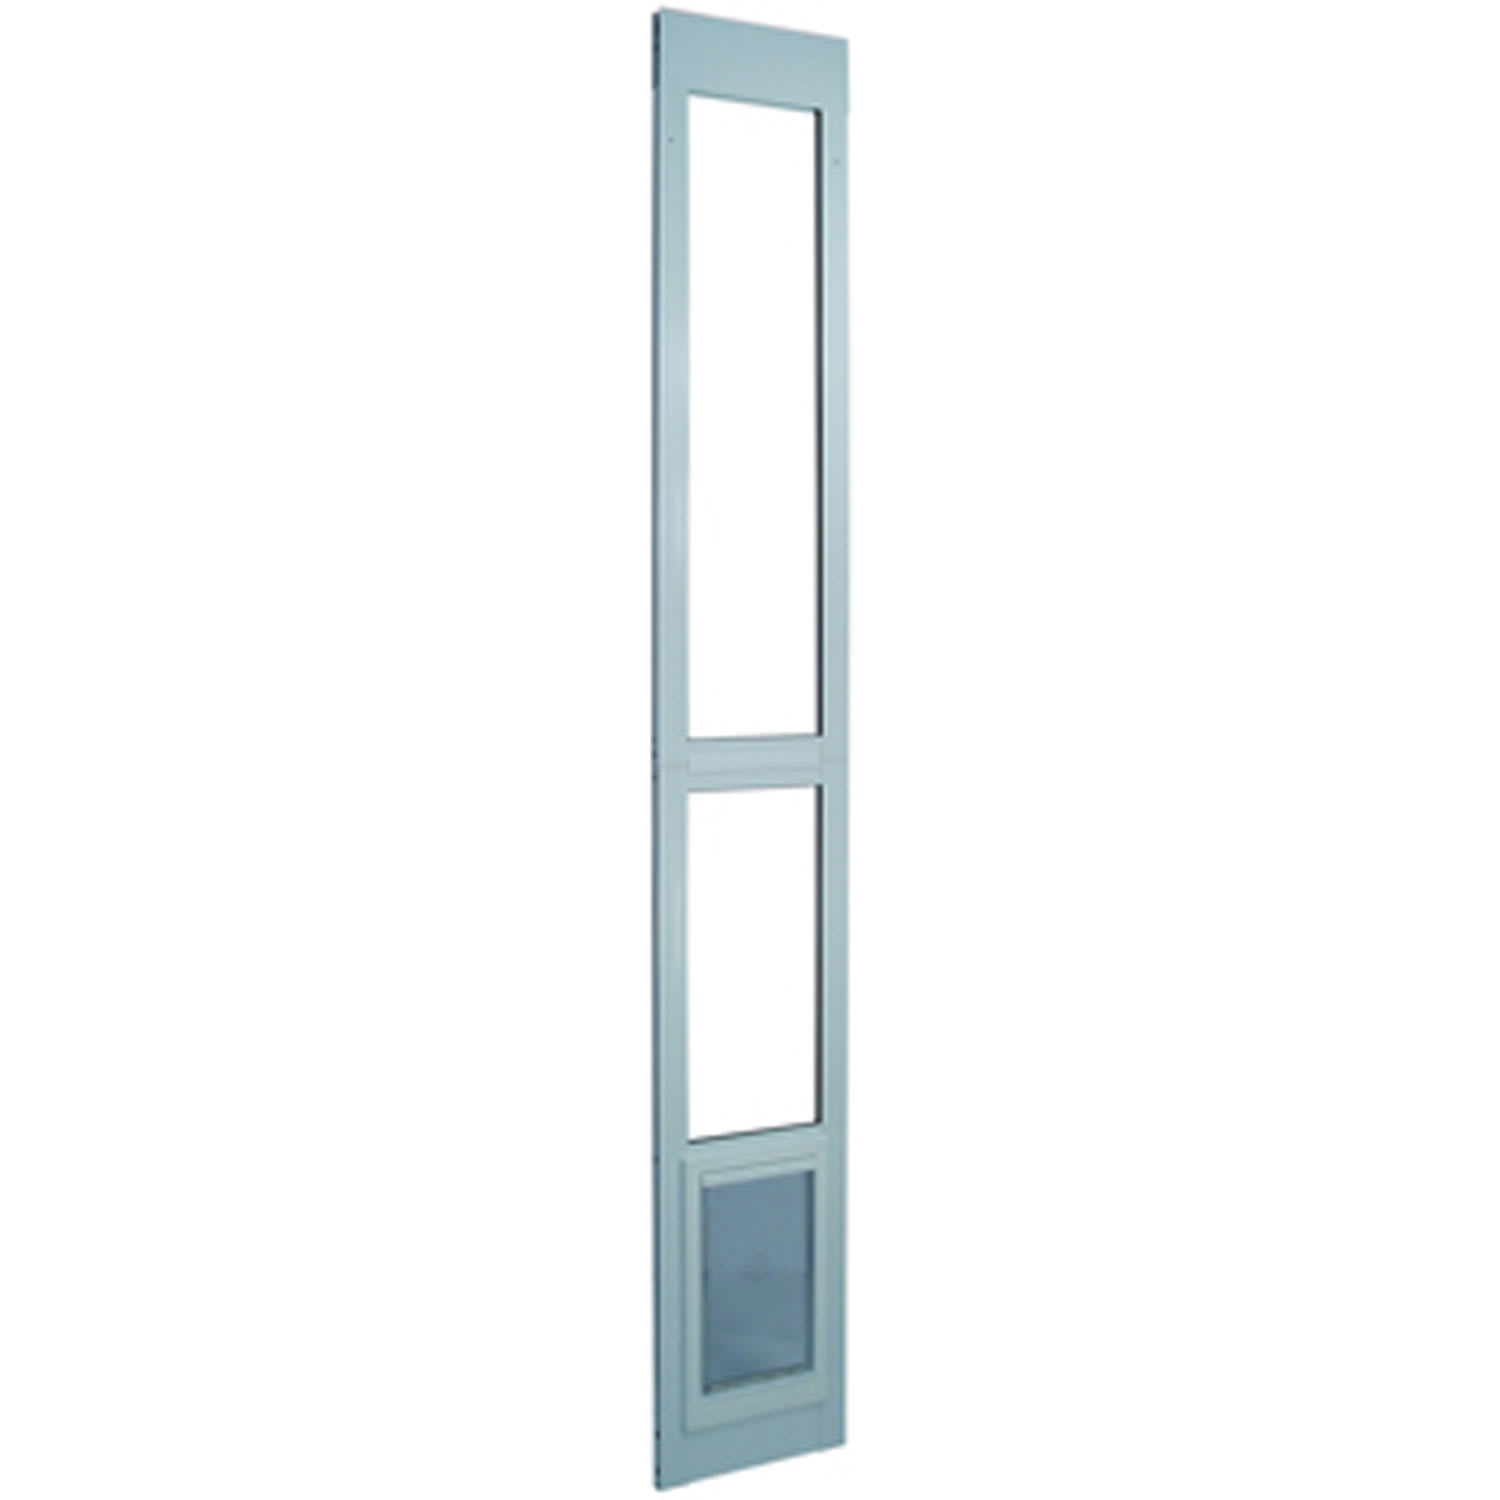 Perfect Pet Modular Patio Panel Pet Door in White, 10.75IN x 1.875IN x 40.75IN, Medium